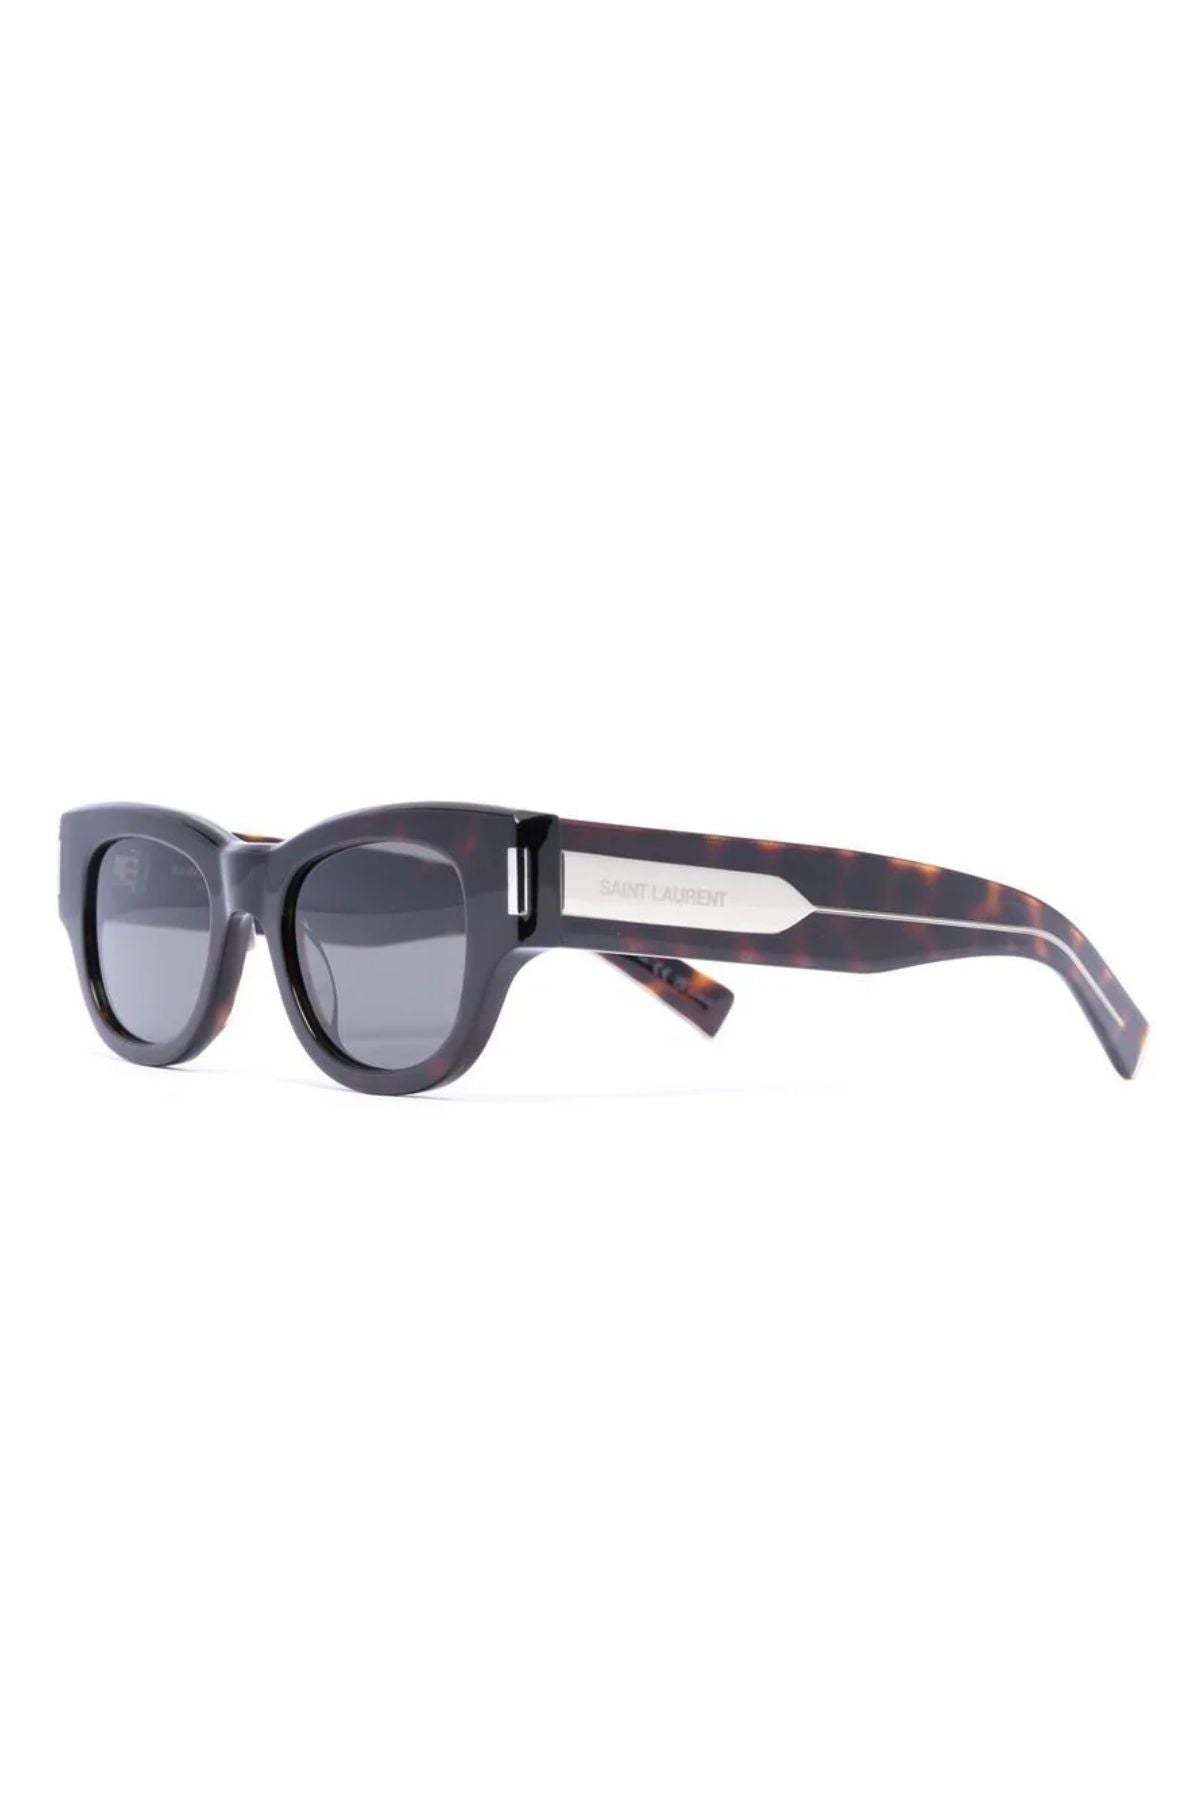 Saint Laurent Oversized Cat Eye Sunglasses - Havana